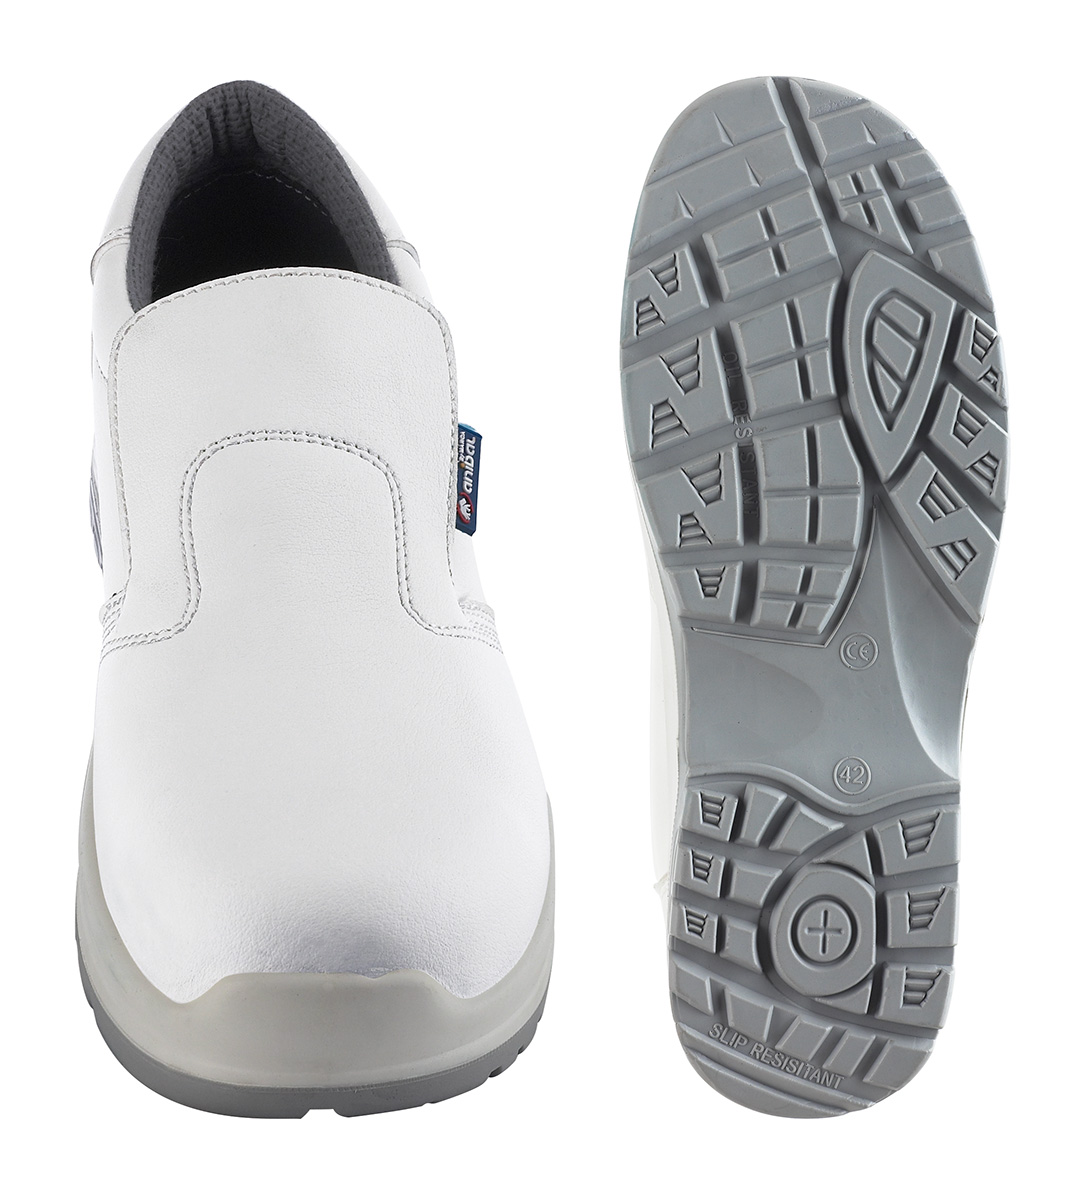 1688-B Safety Footwear Basic Line Mod. 'MASTIA'. Black microfiber leather boot S1P with double density polyurethane sole.